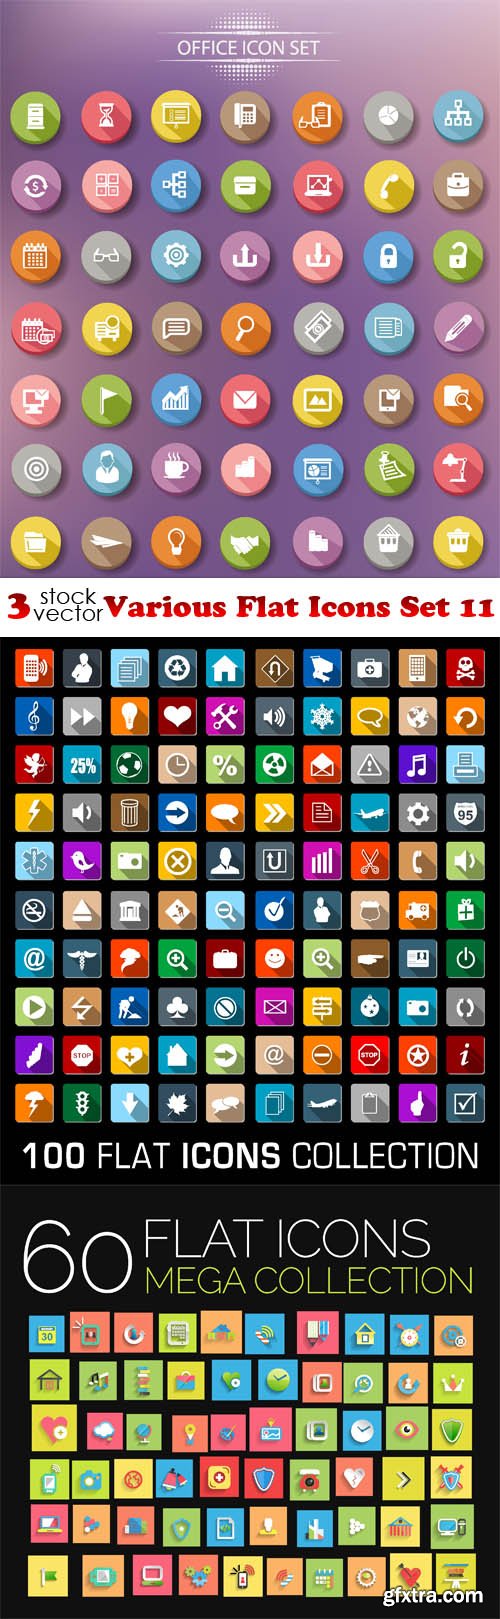 Vectors - Various Flat Icons Set 11